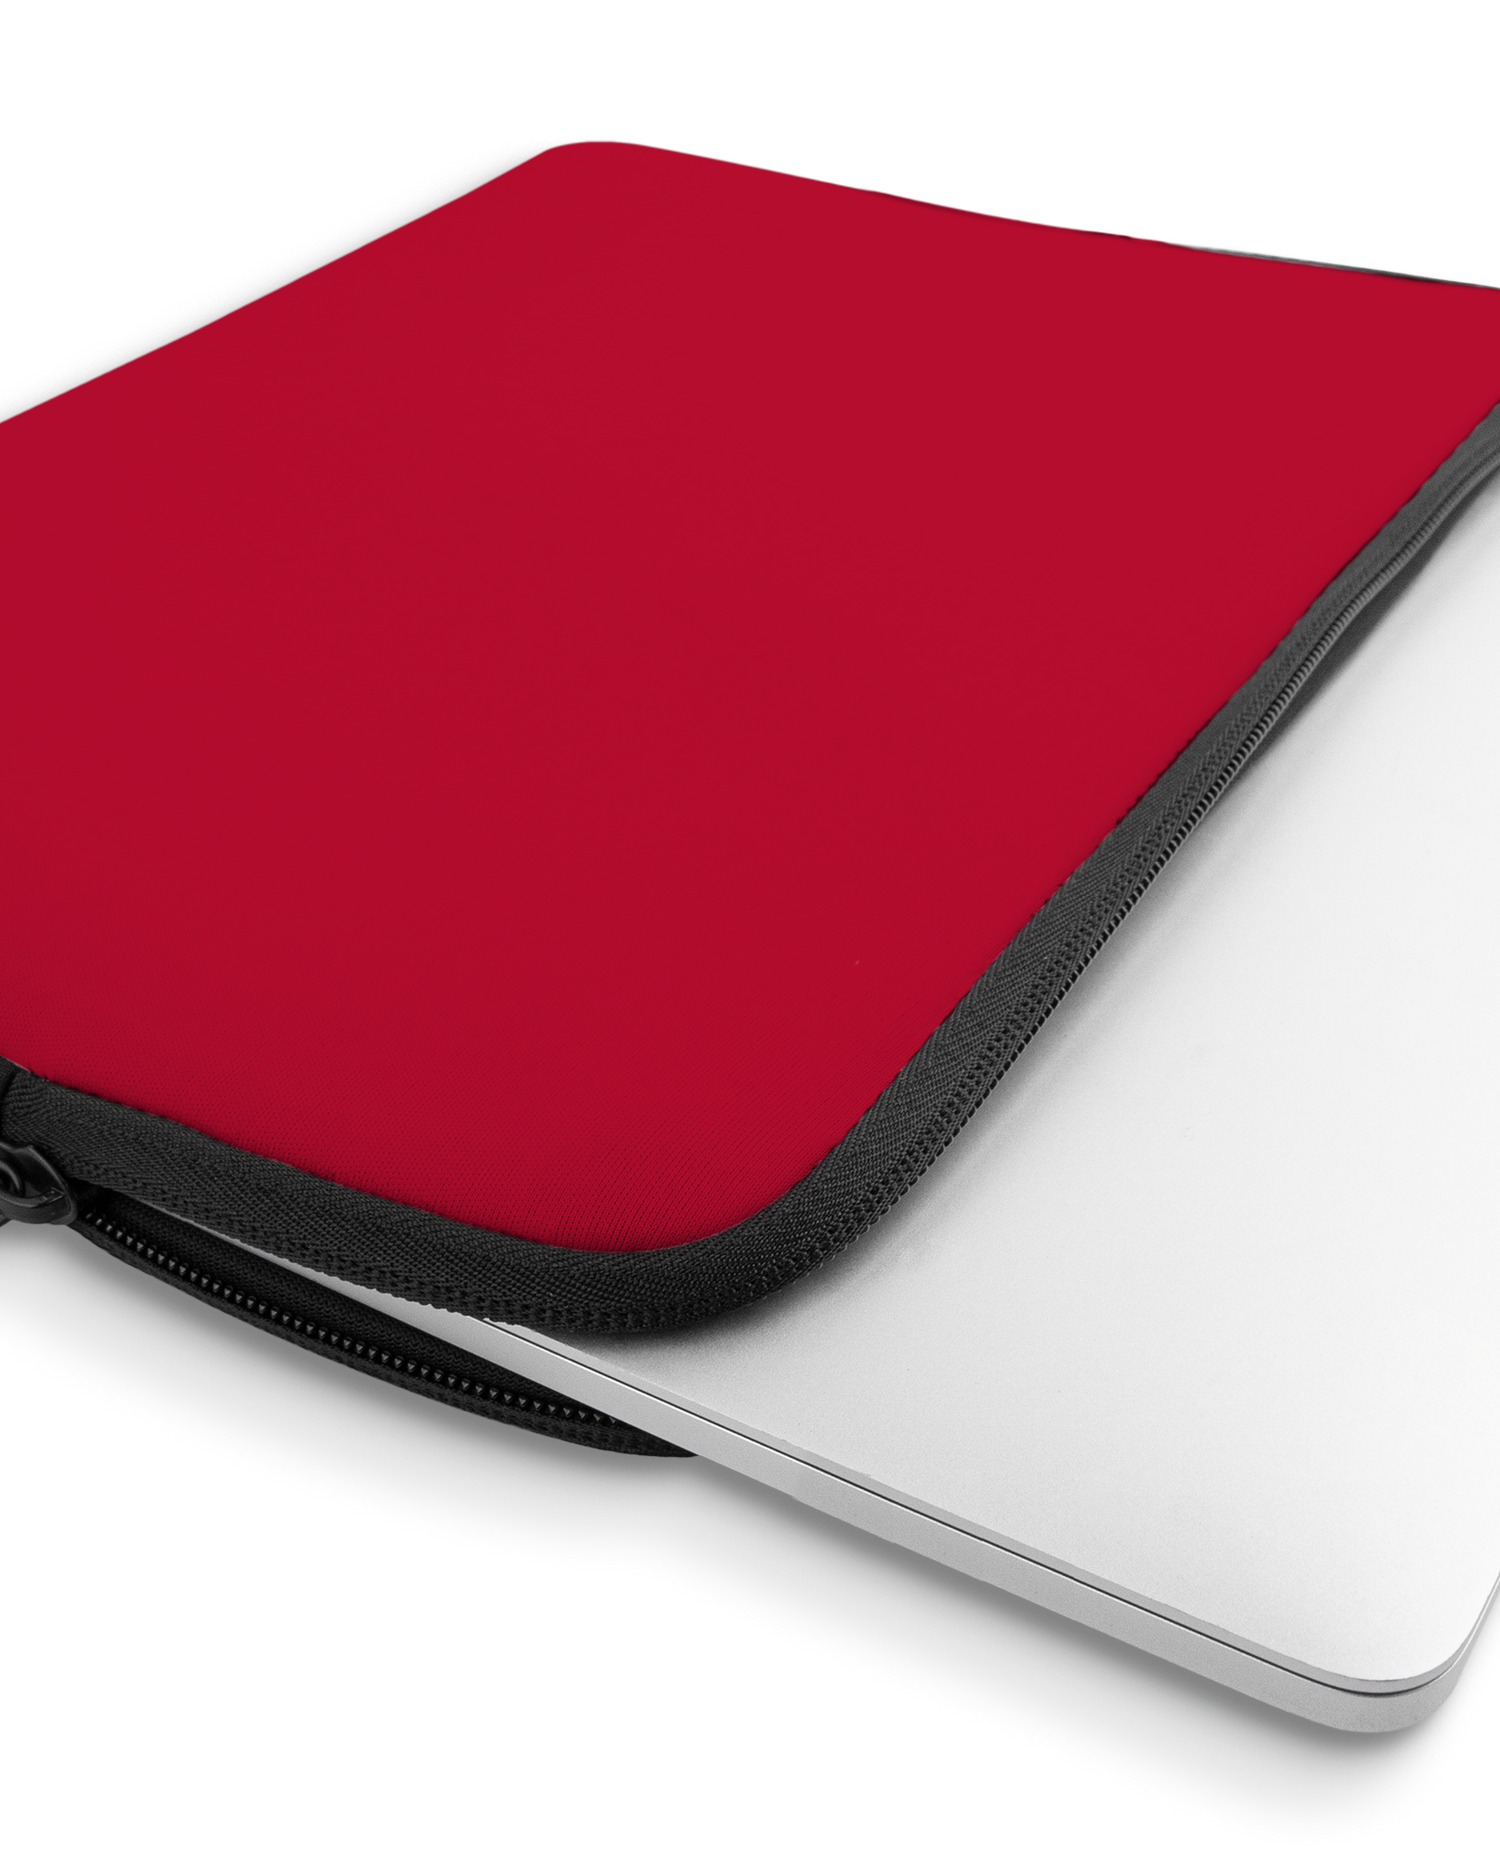 RED Laptophülle 13 Zoll mit Gerät im Inneren